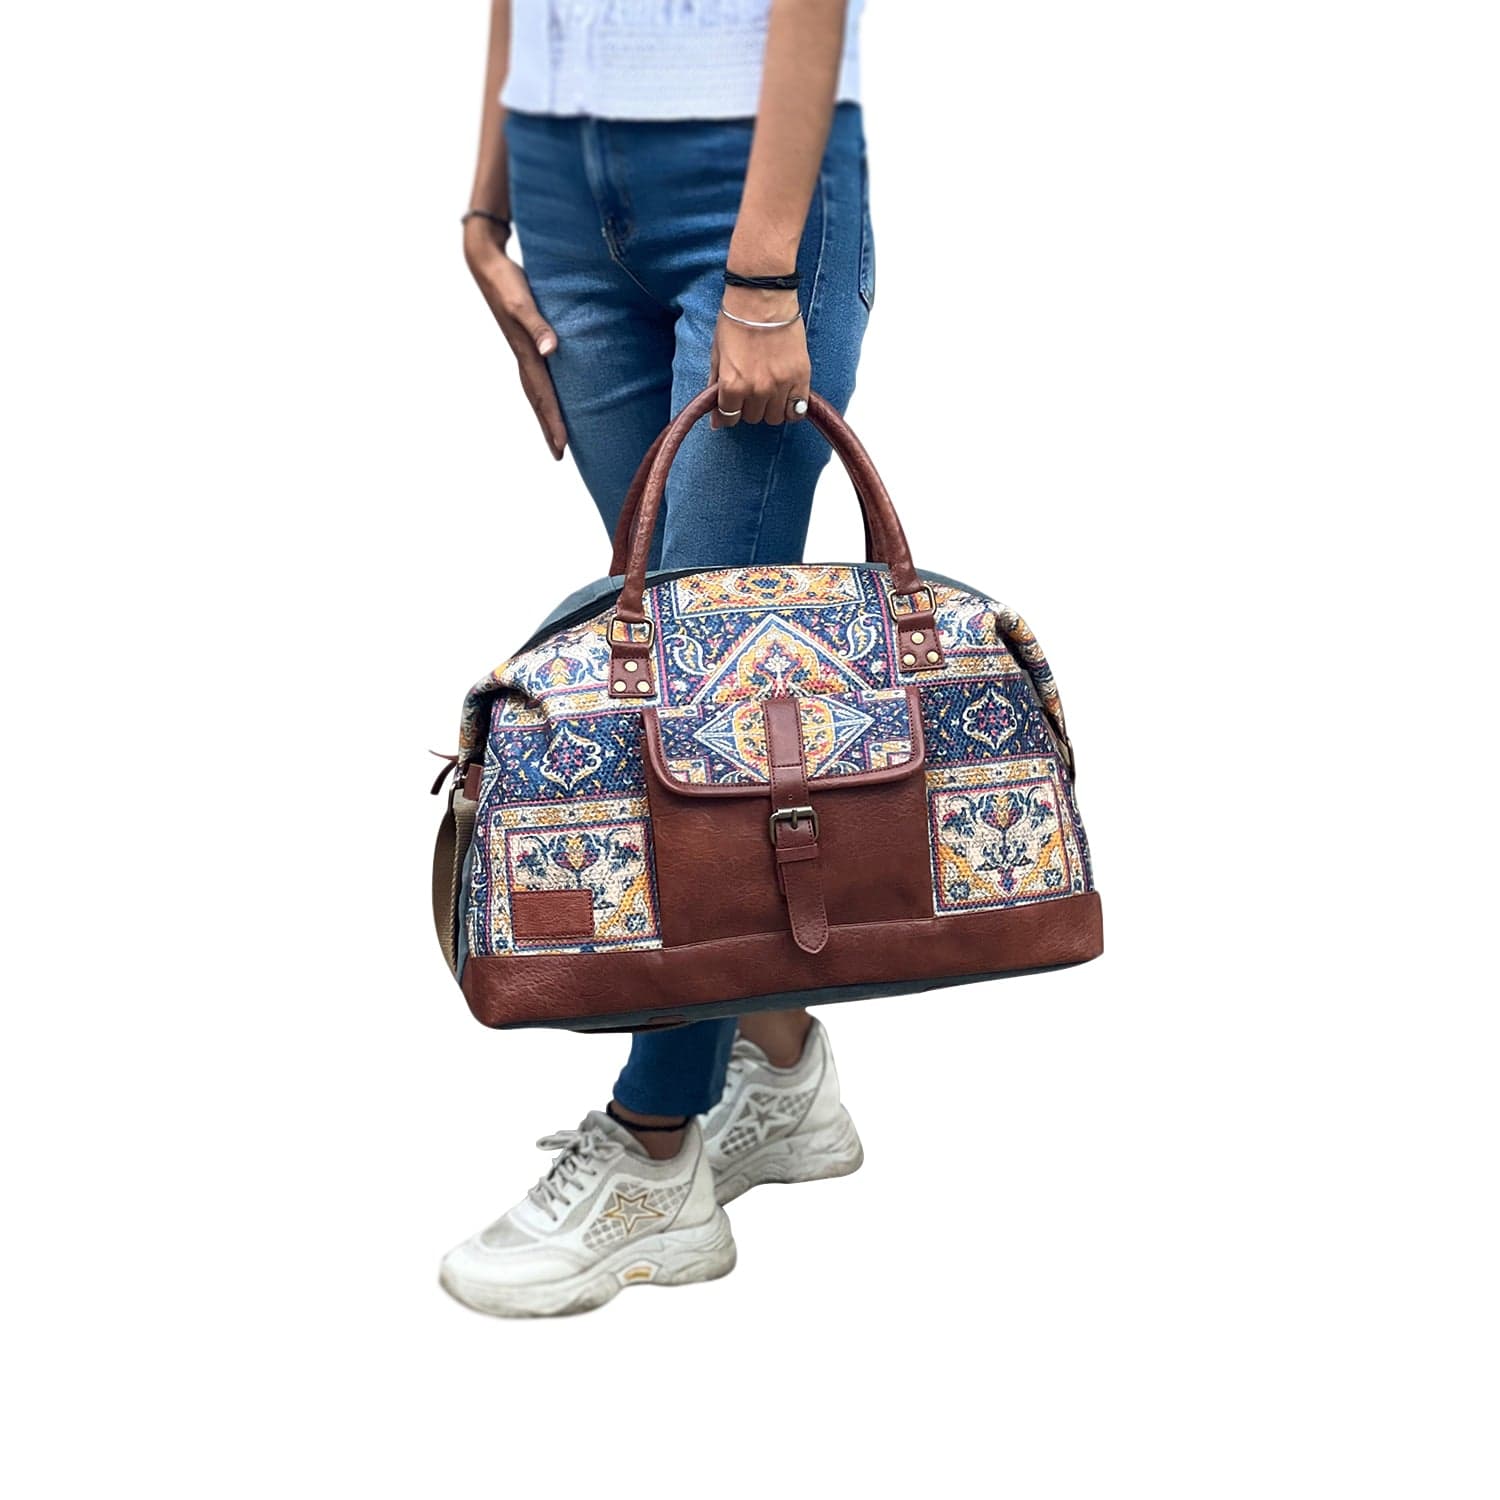 Mona B Unisex Canvas Duffel Bag for Gym, Sports, Travel: Chocolate, Large - (M-7012) - Duffel by Mona-B - Backpack, Flash Sale, Flat40, Sale, Shop2999, Shop3999